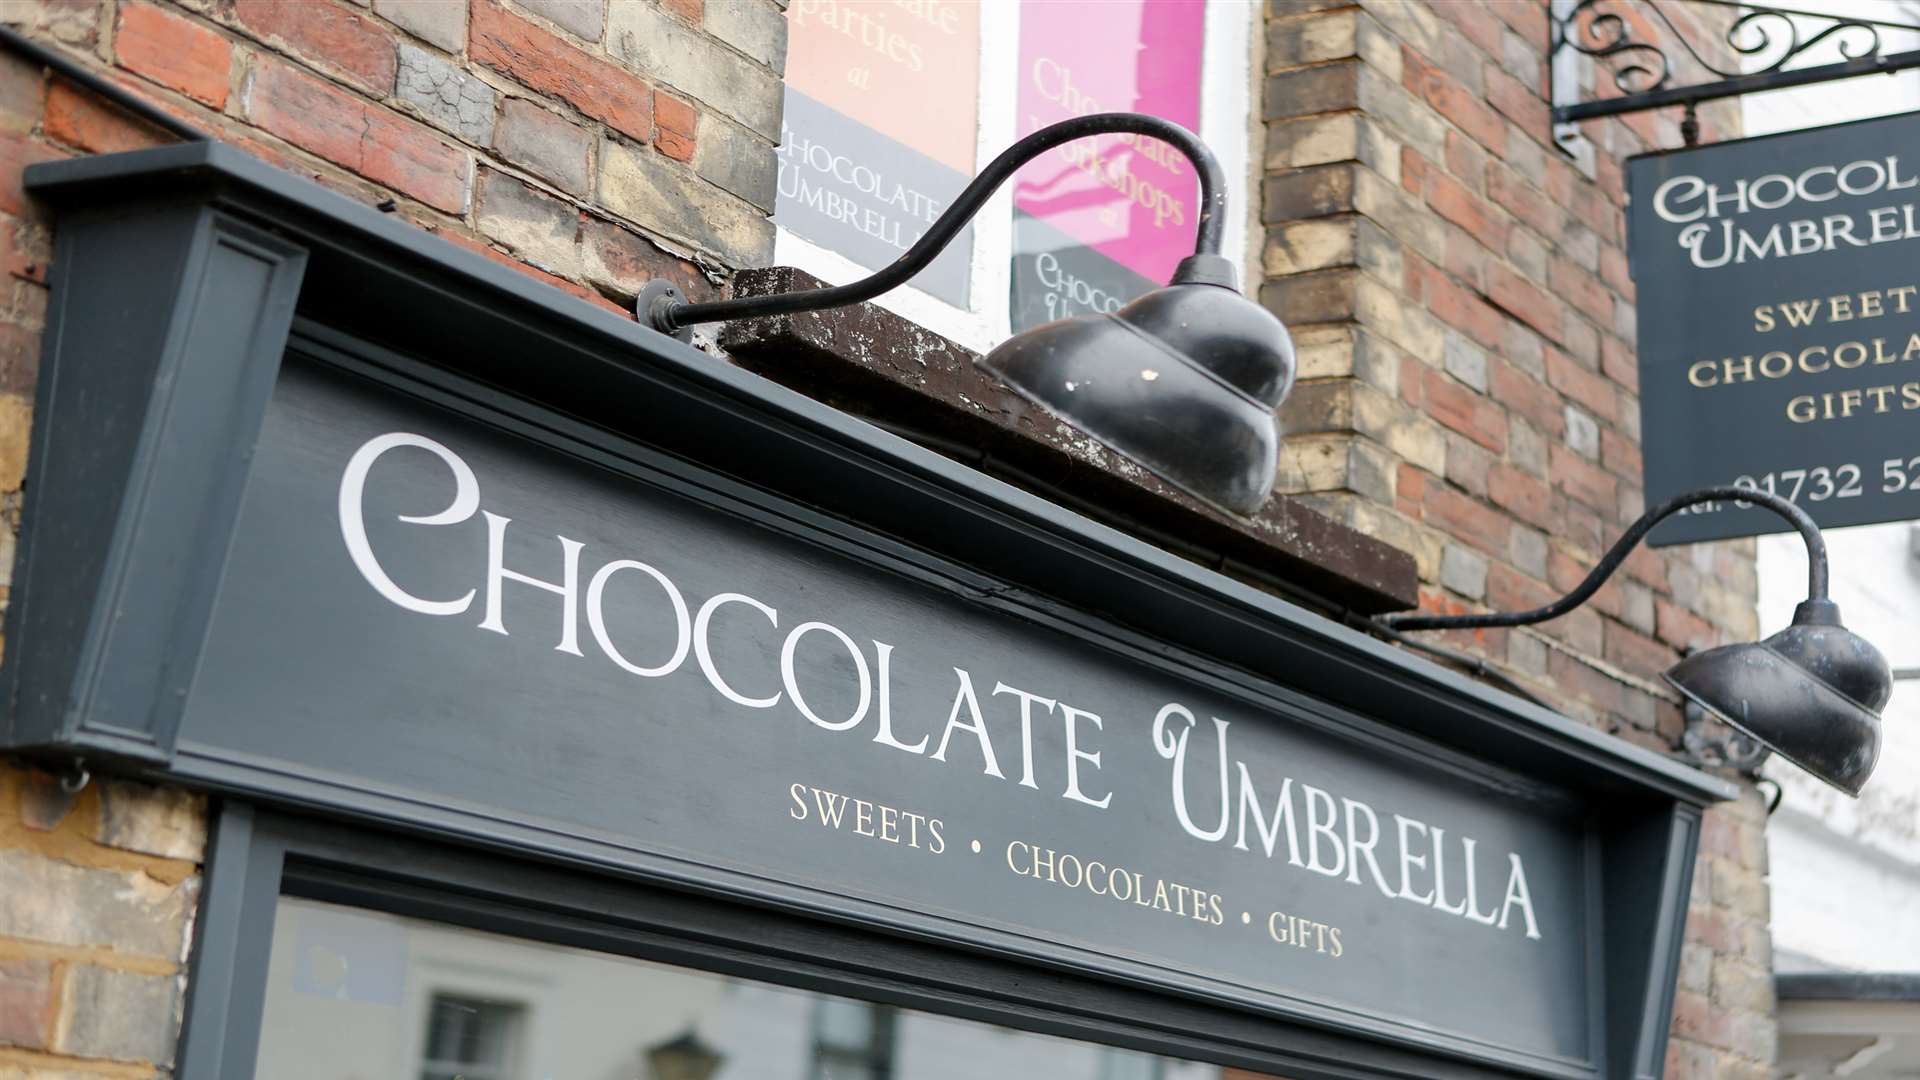 Chocolate Umbrella in the High Street